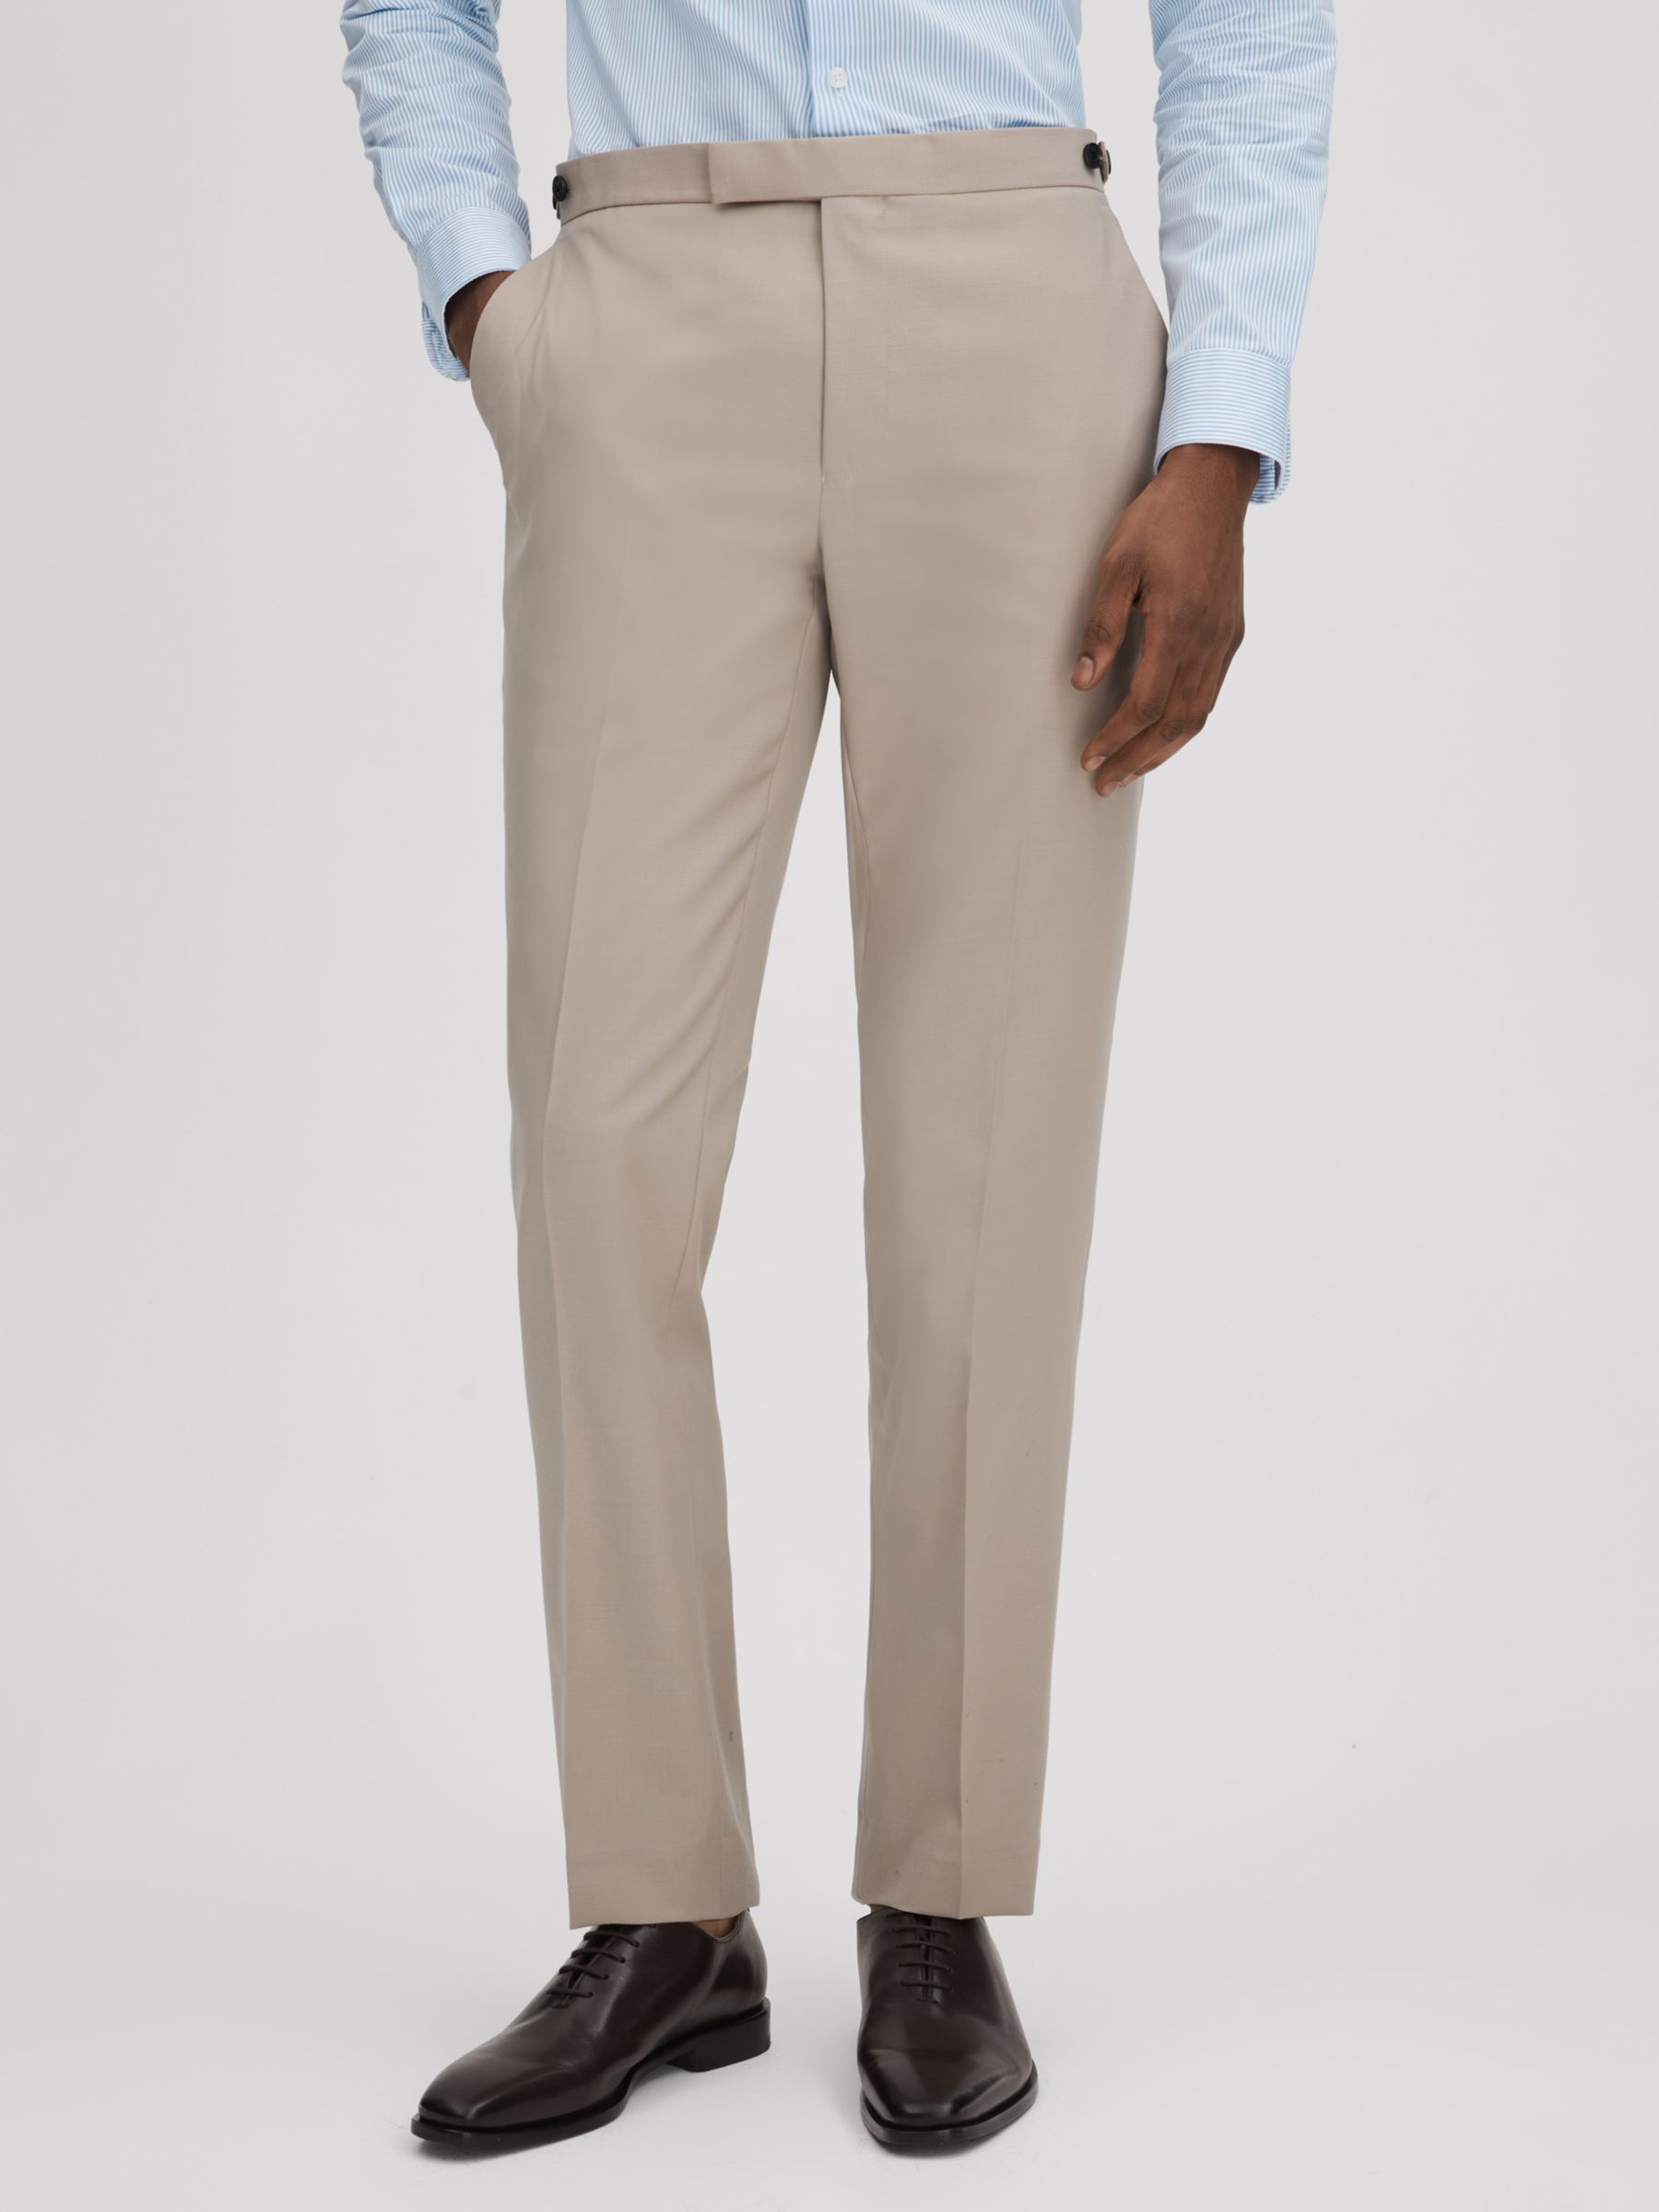 Reiss Dillon Plain Wool Blend Trousers, Stone, 28R